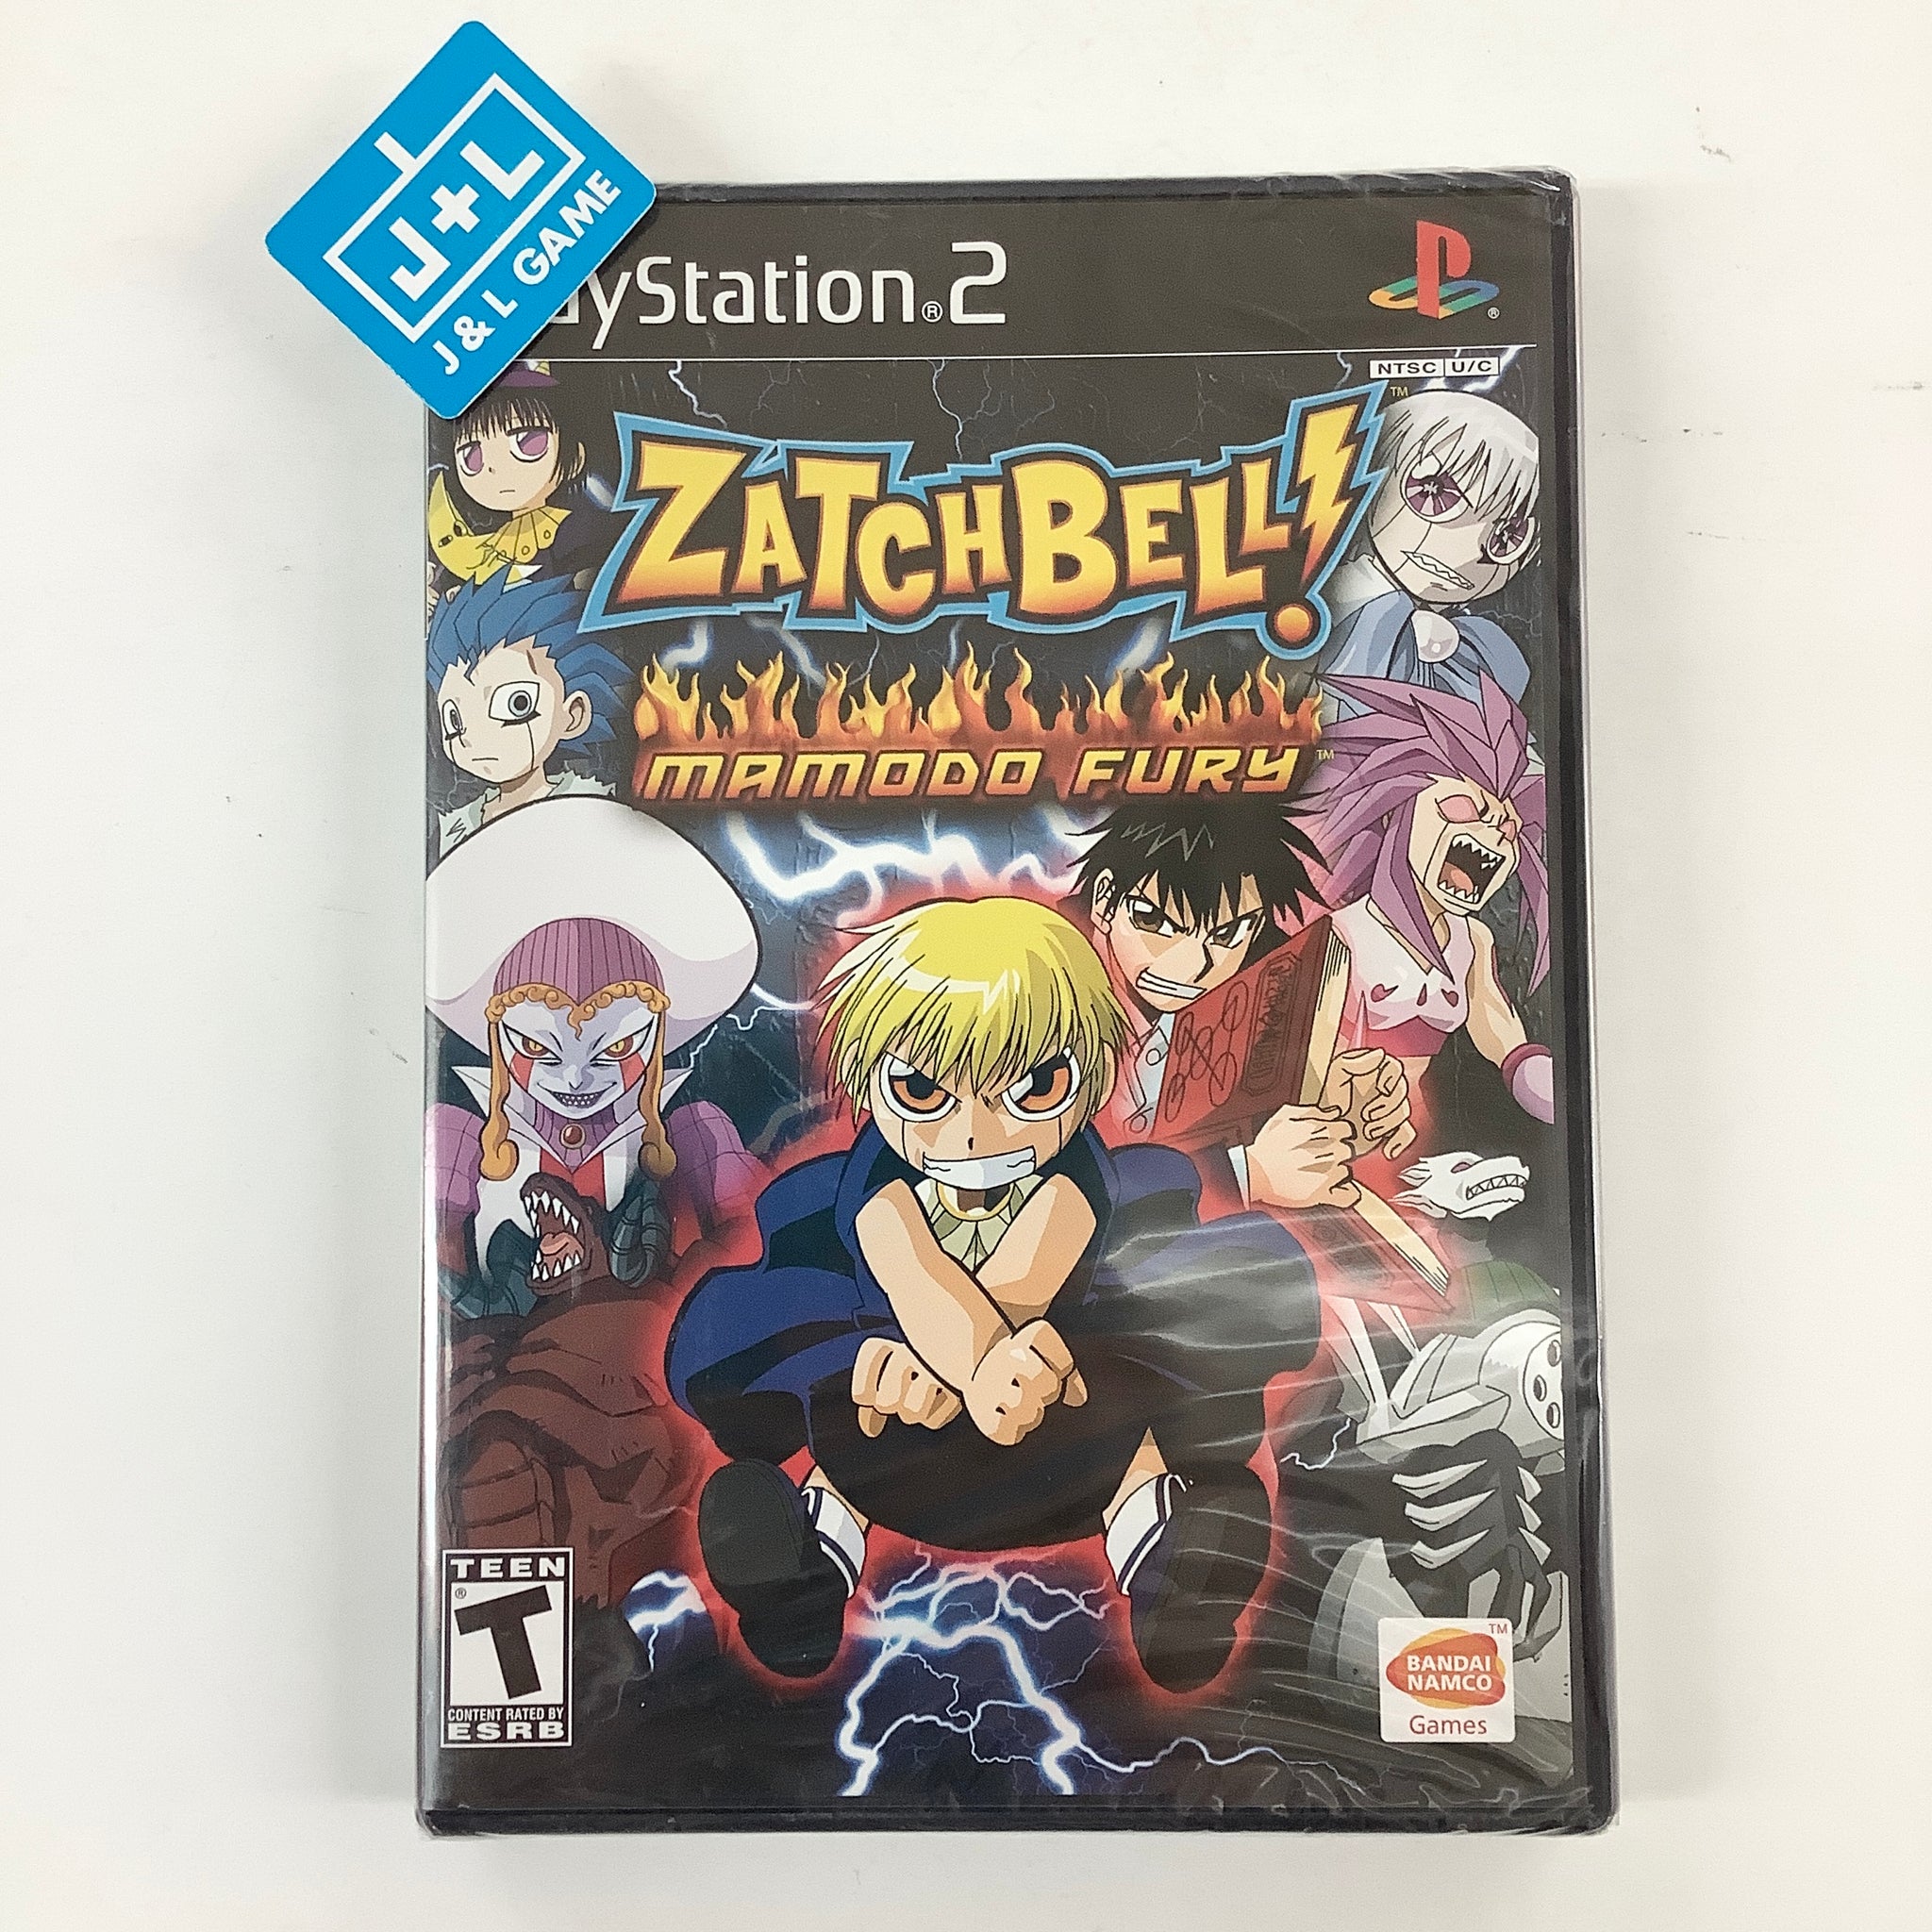 Zatch Bell! Mamodo Battles (Japanese) - Story Mode - Part 1 